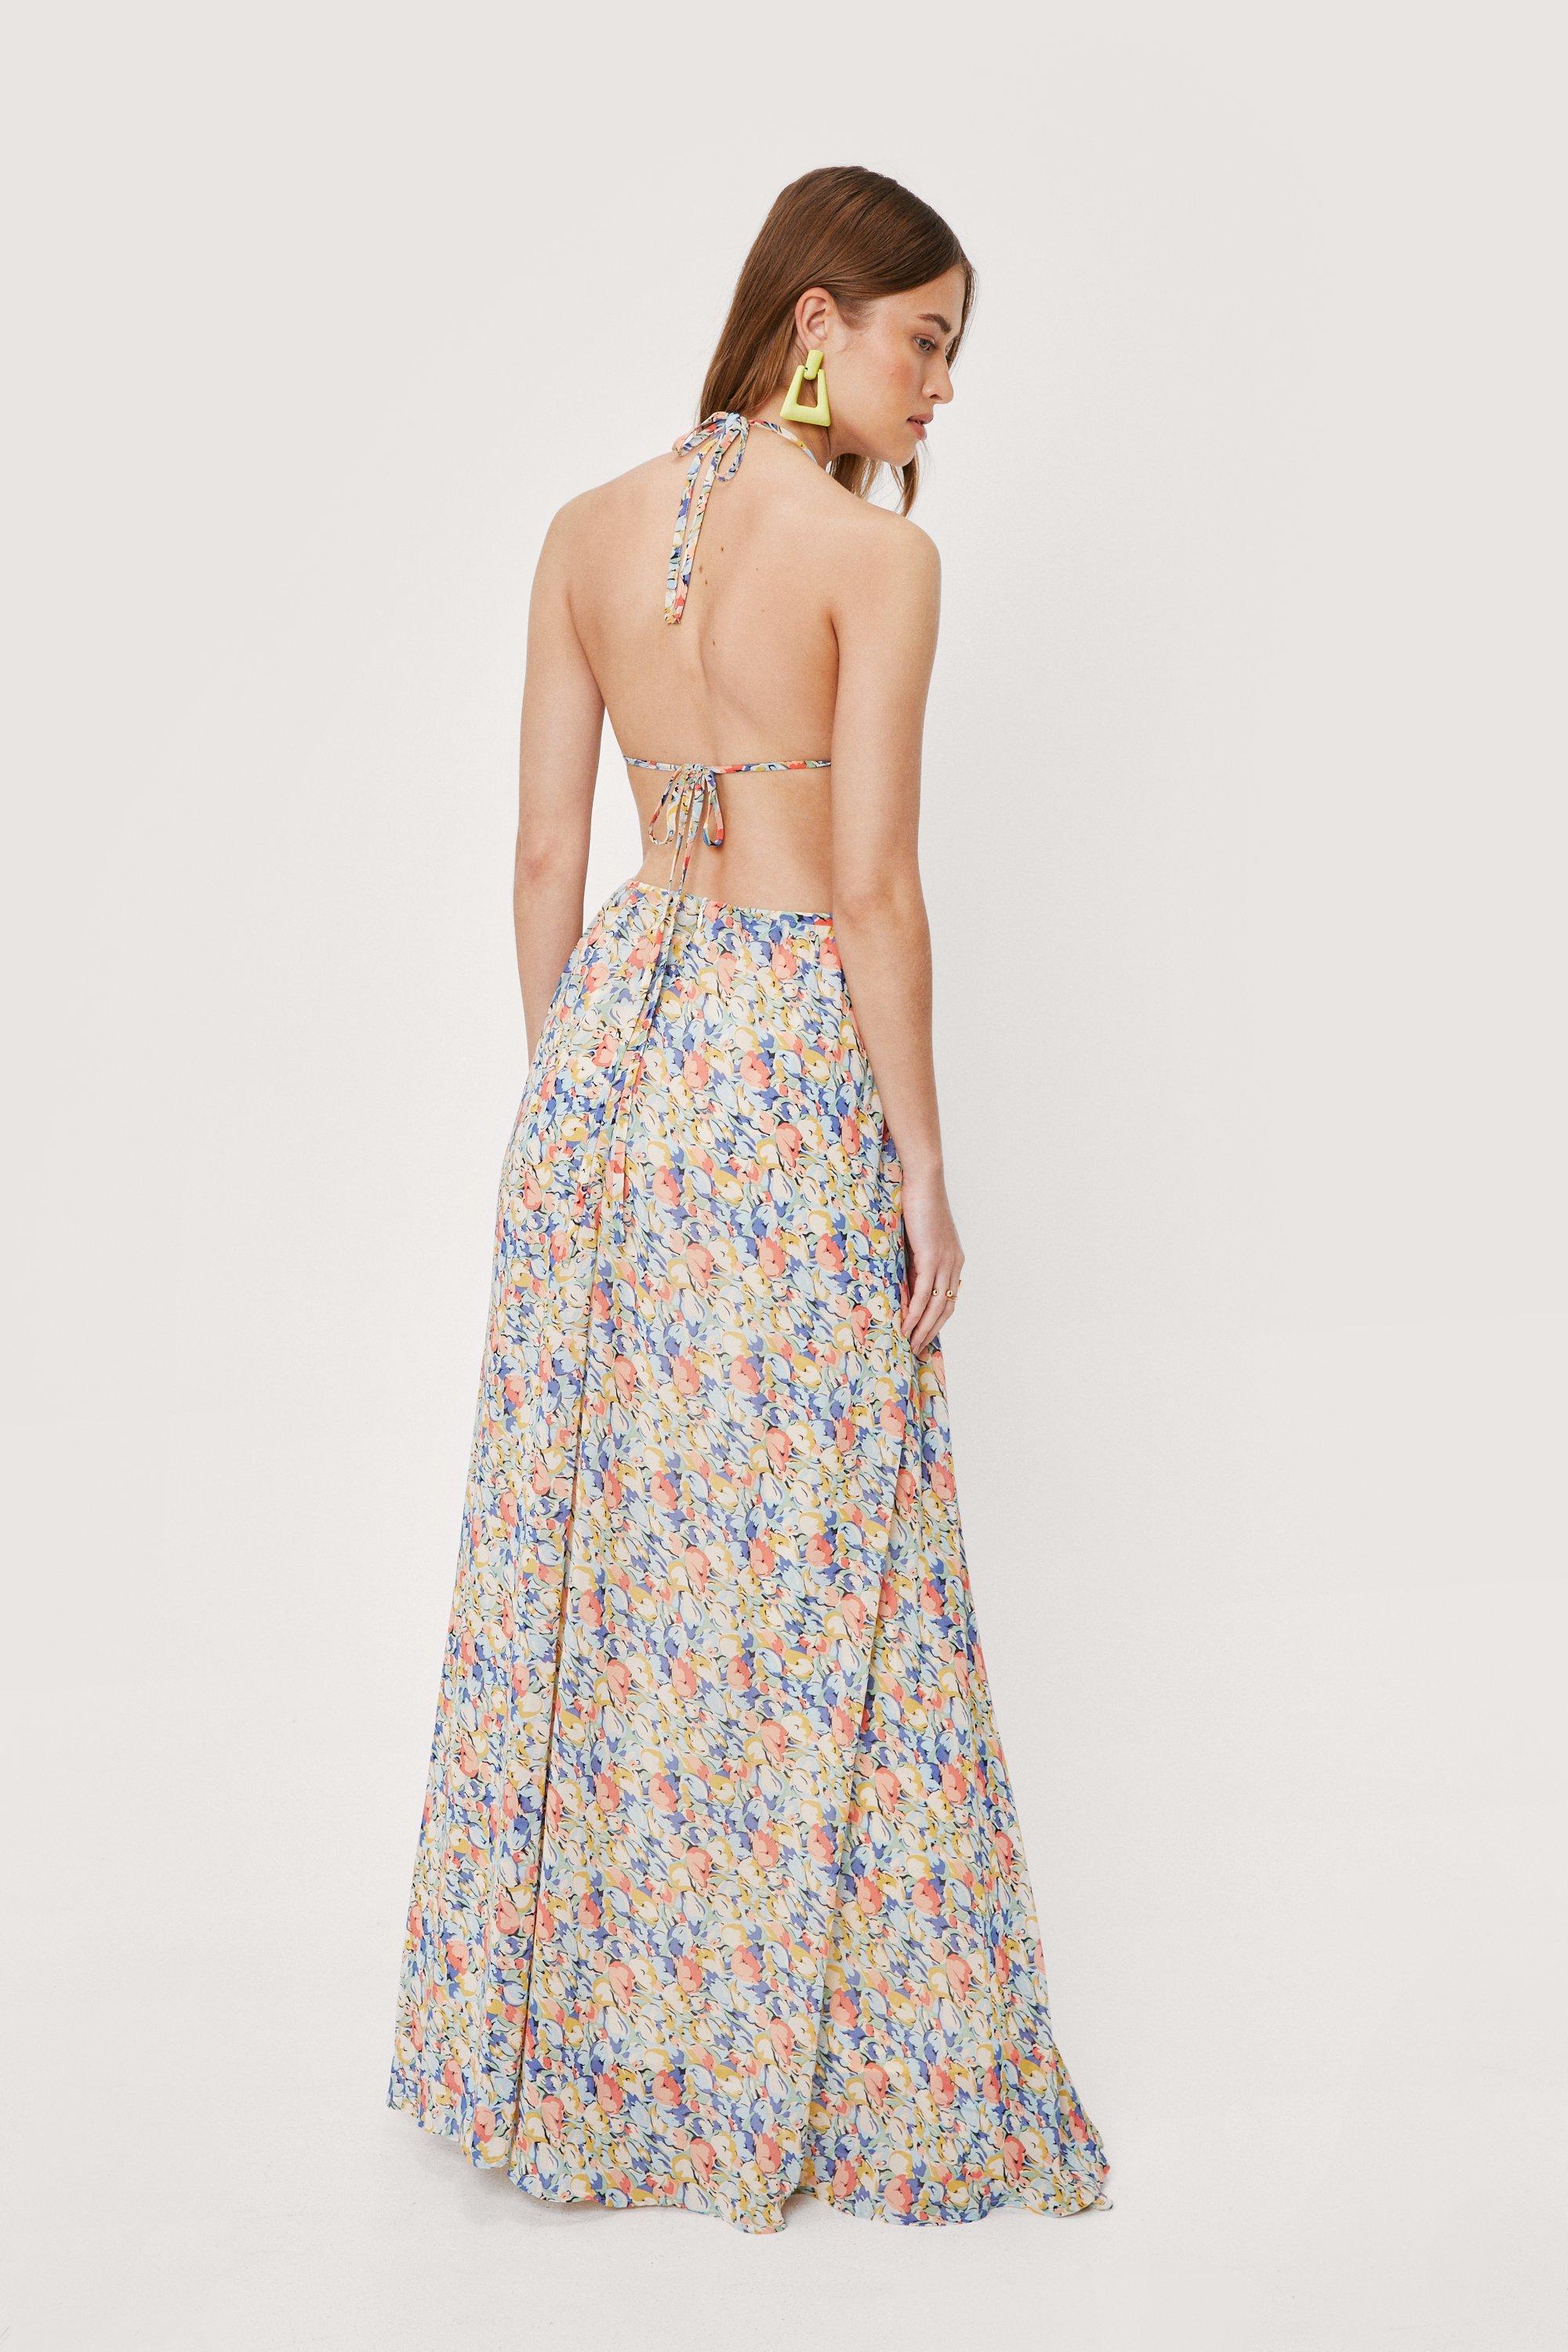 Floral Print Backless Maxi Dress ...